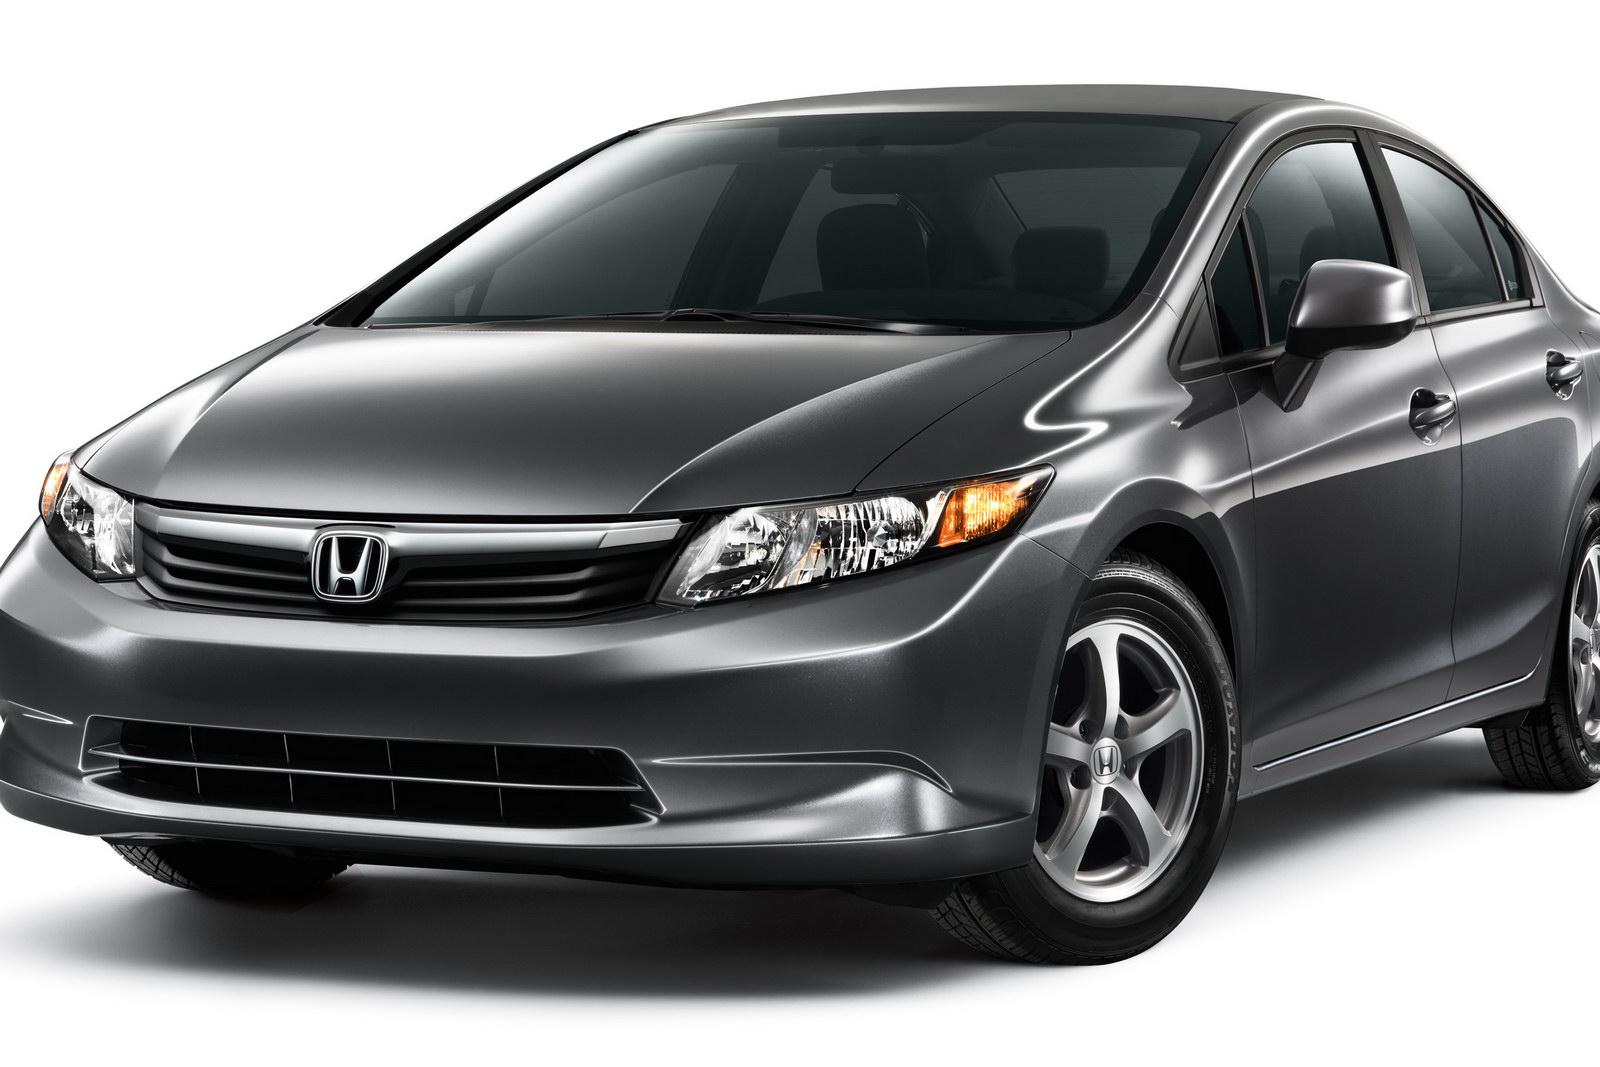 Hnd honda. Хонда Цивик 2012 седан. Honda Civic 2013. Хонда Цивик 2011 седан. Honda Civic 2013 седан.